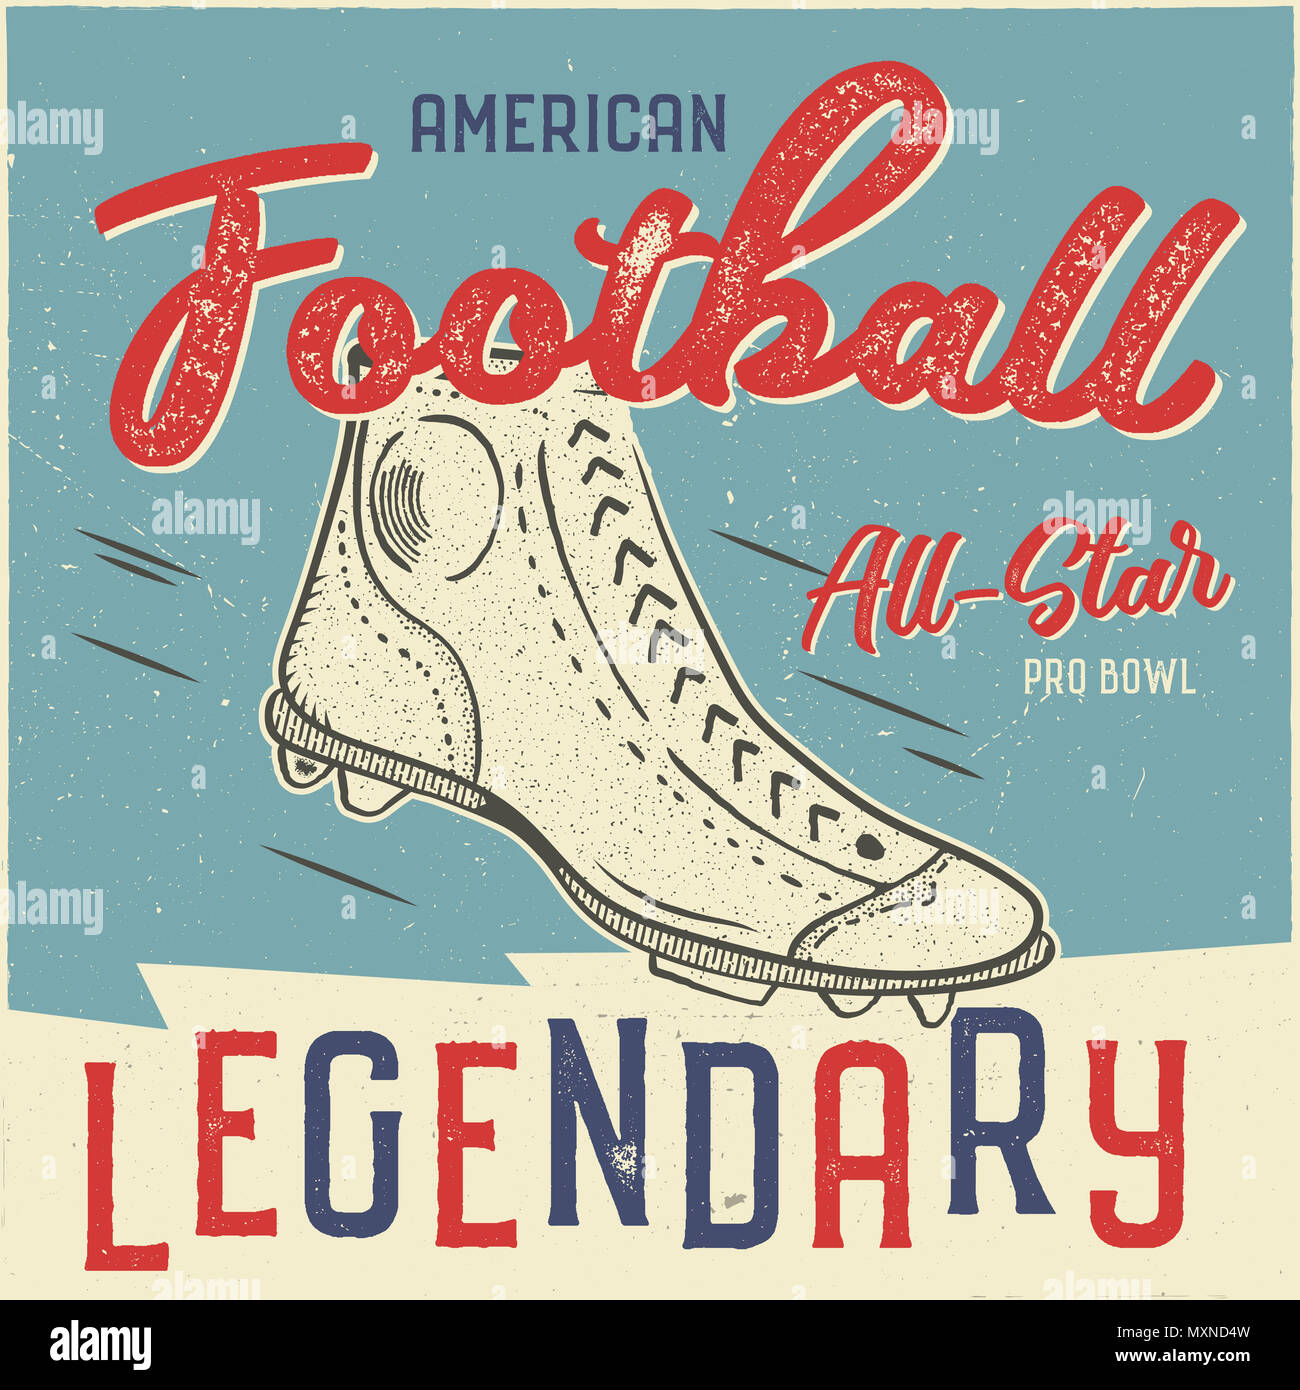 Classic usa football t shirt design. American football tee graphic design.  All star bowl sign. USA